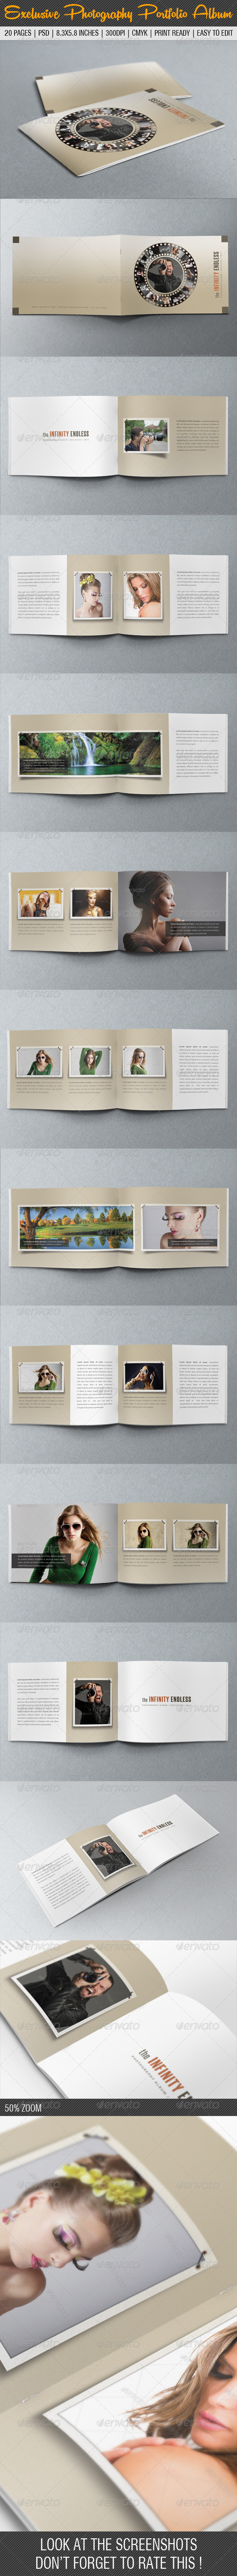 Exclusive Photography Portfolio Album 04 - Photo Albums Print Templates